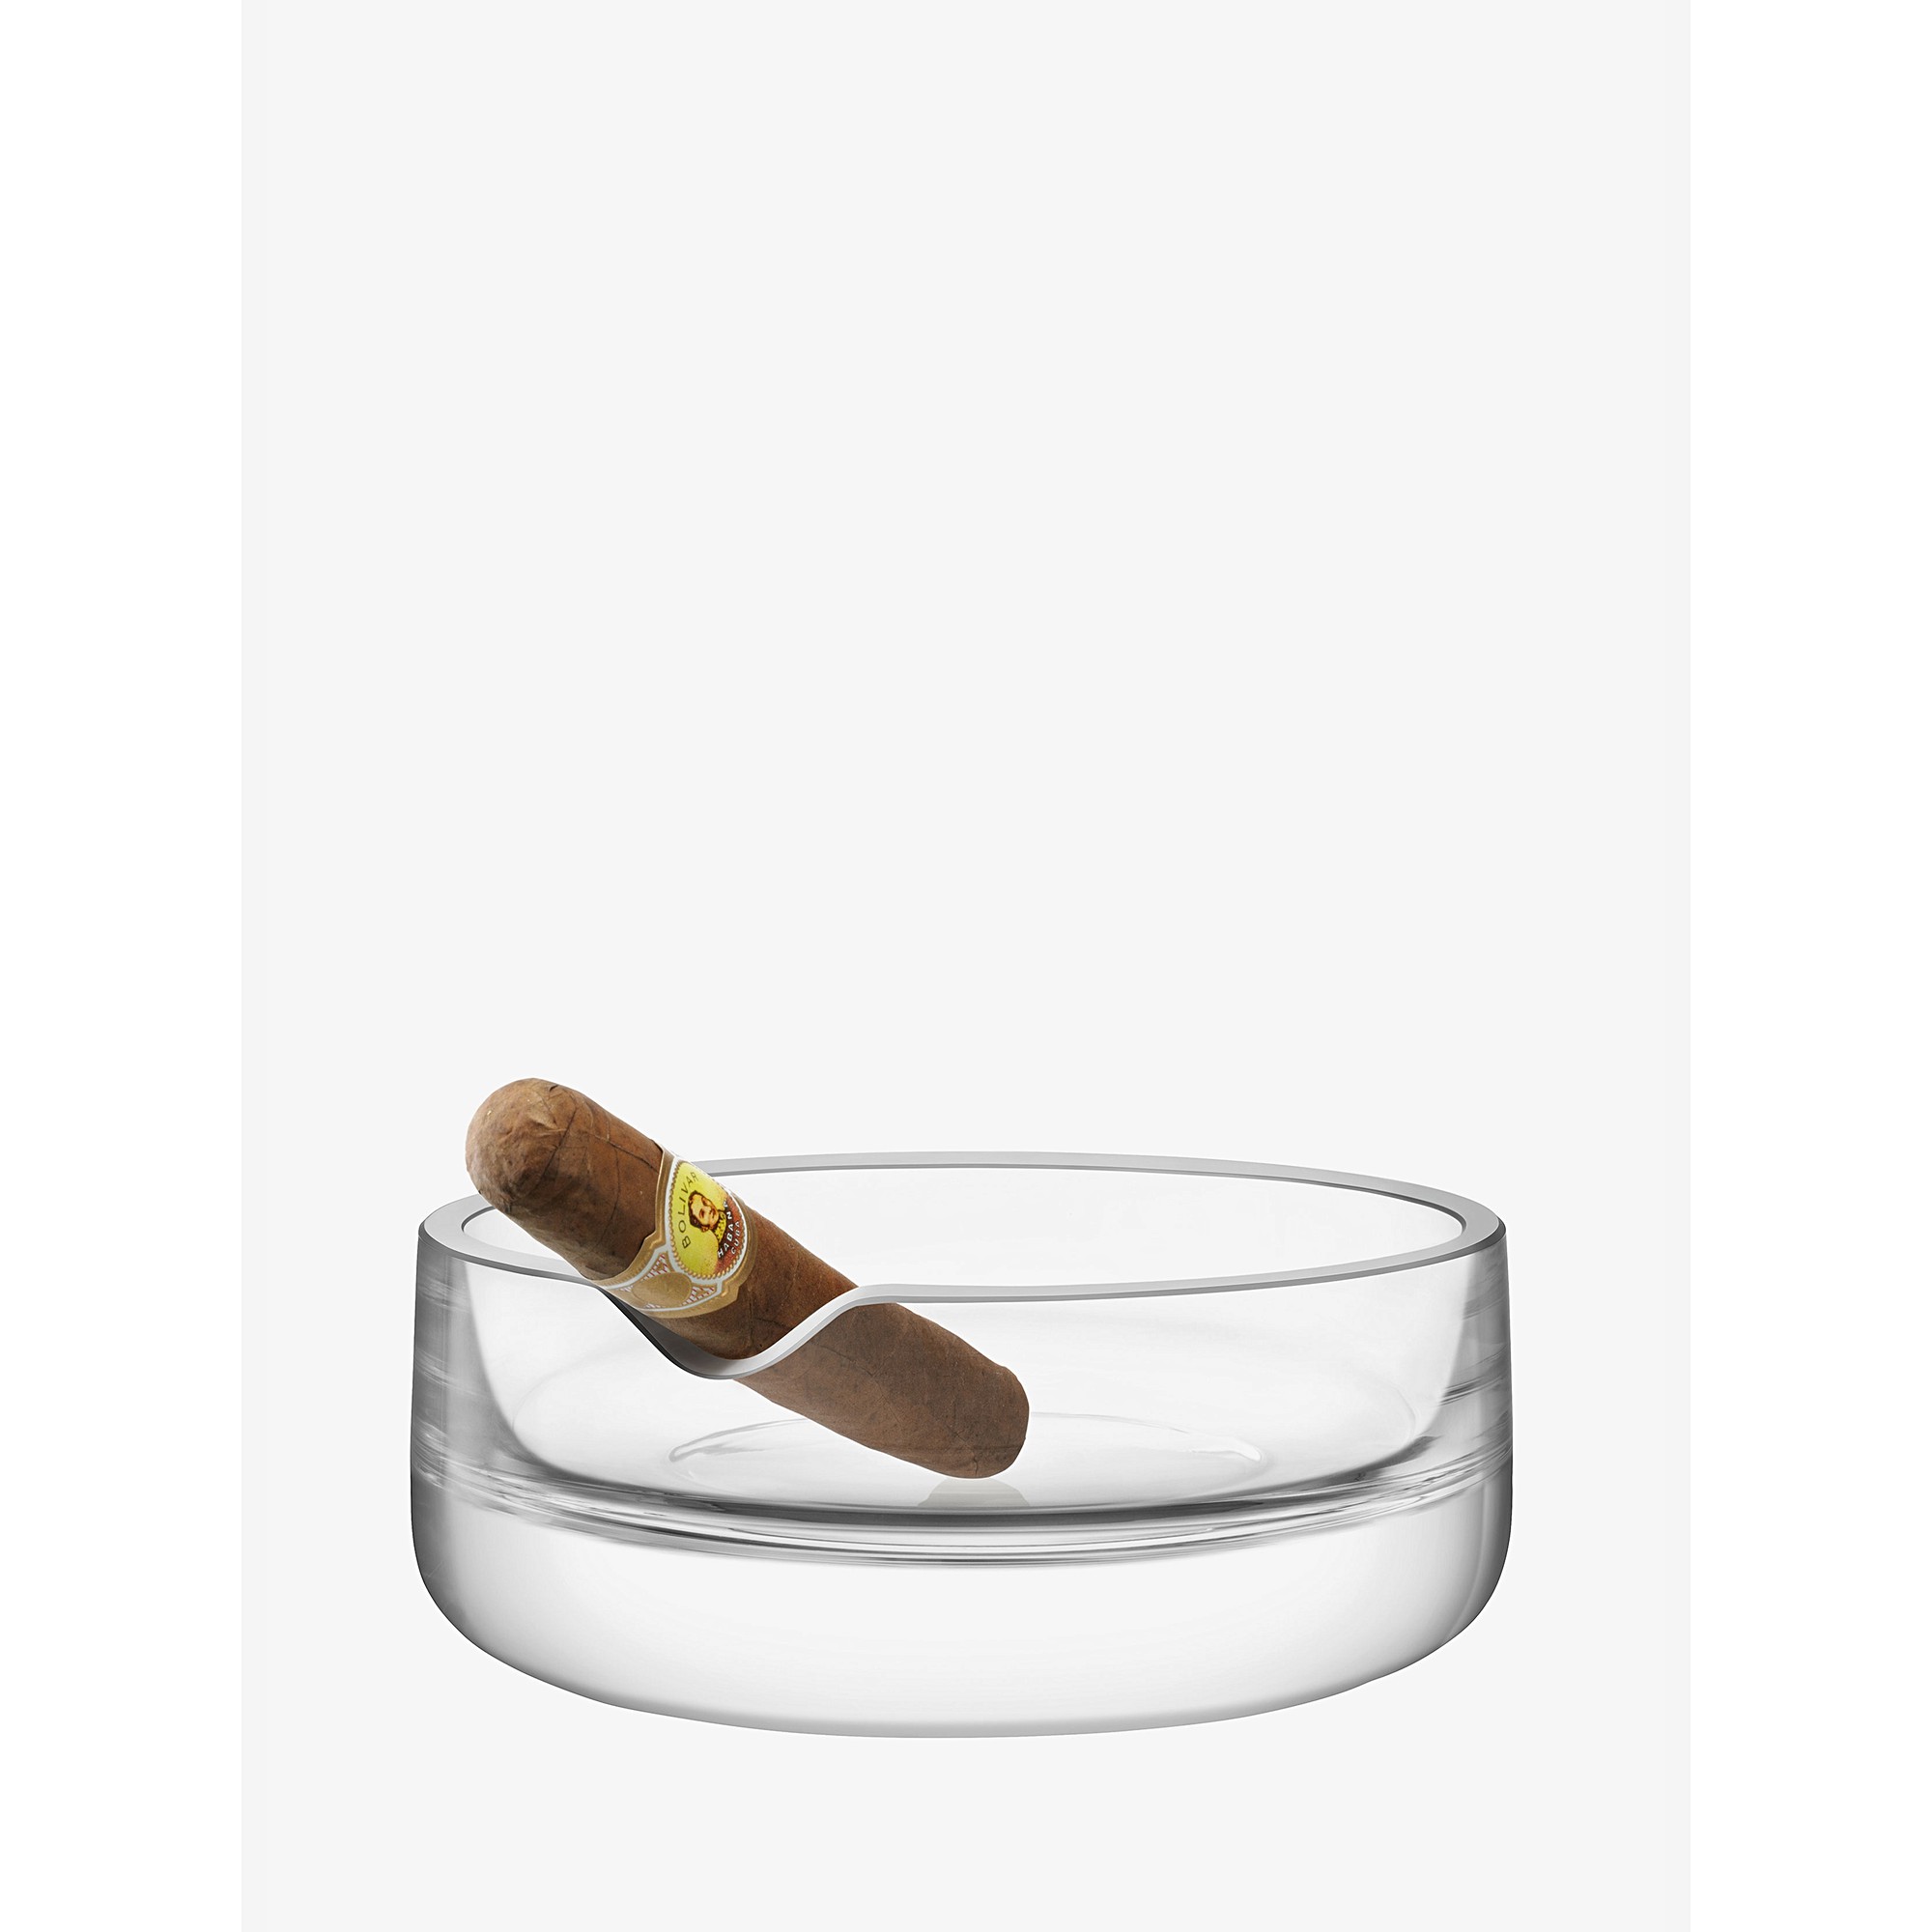 LSA BAR CULTURE Cigar Ashtray Image